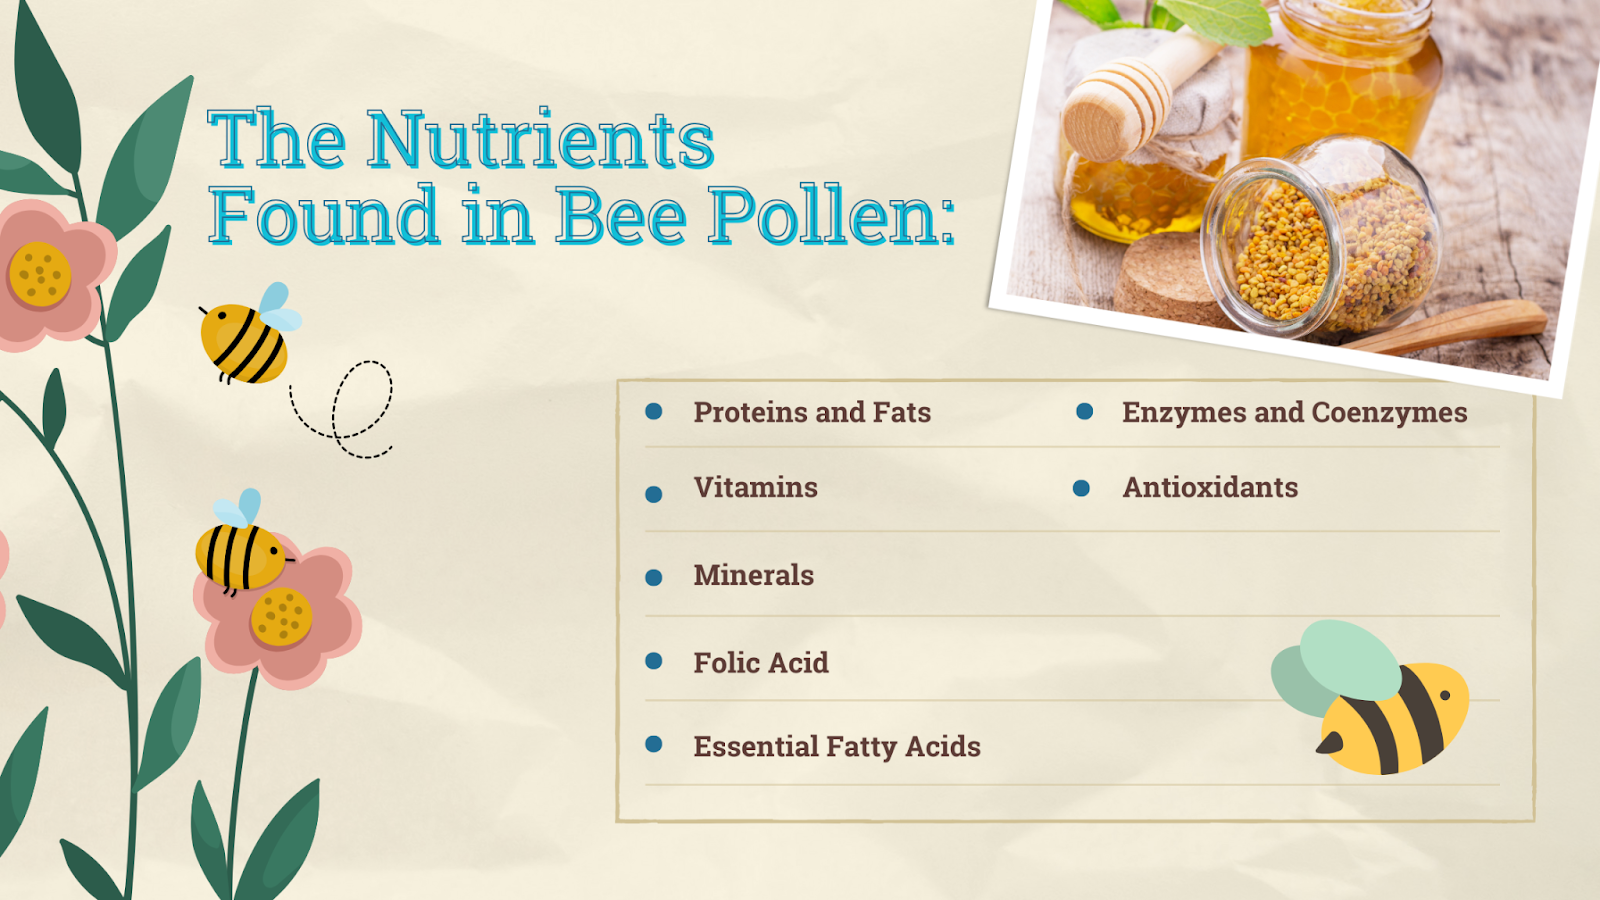 Nutrients found in bee pollen